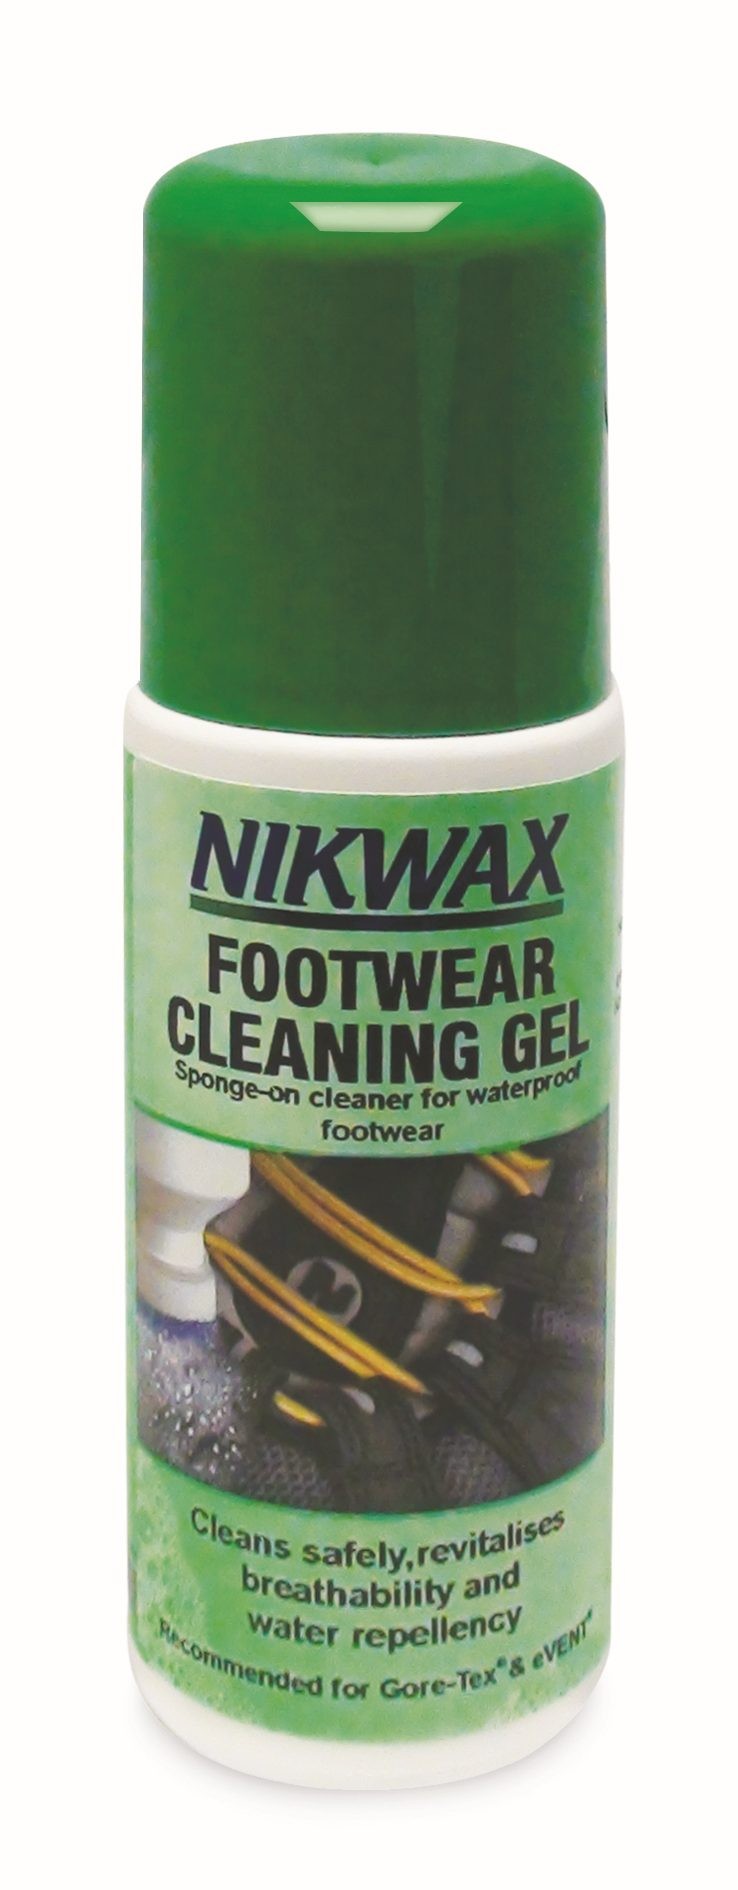 nikwax footwear cleaning gel